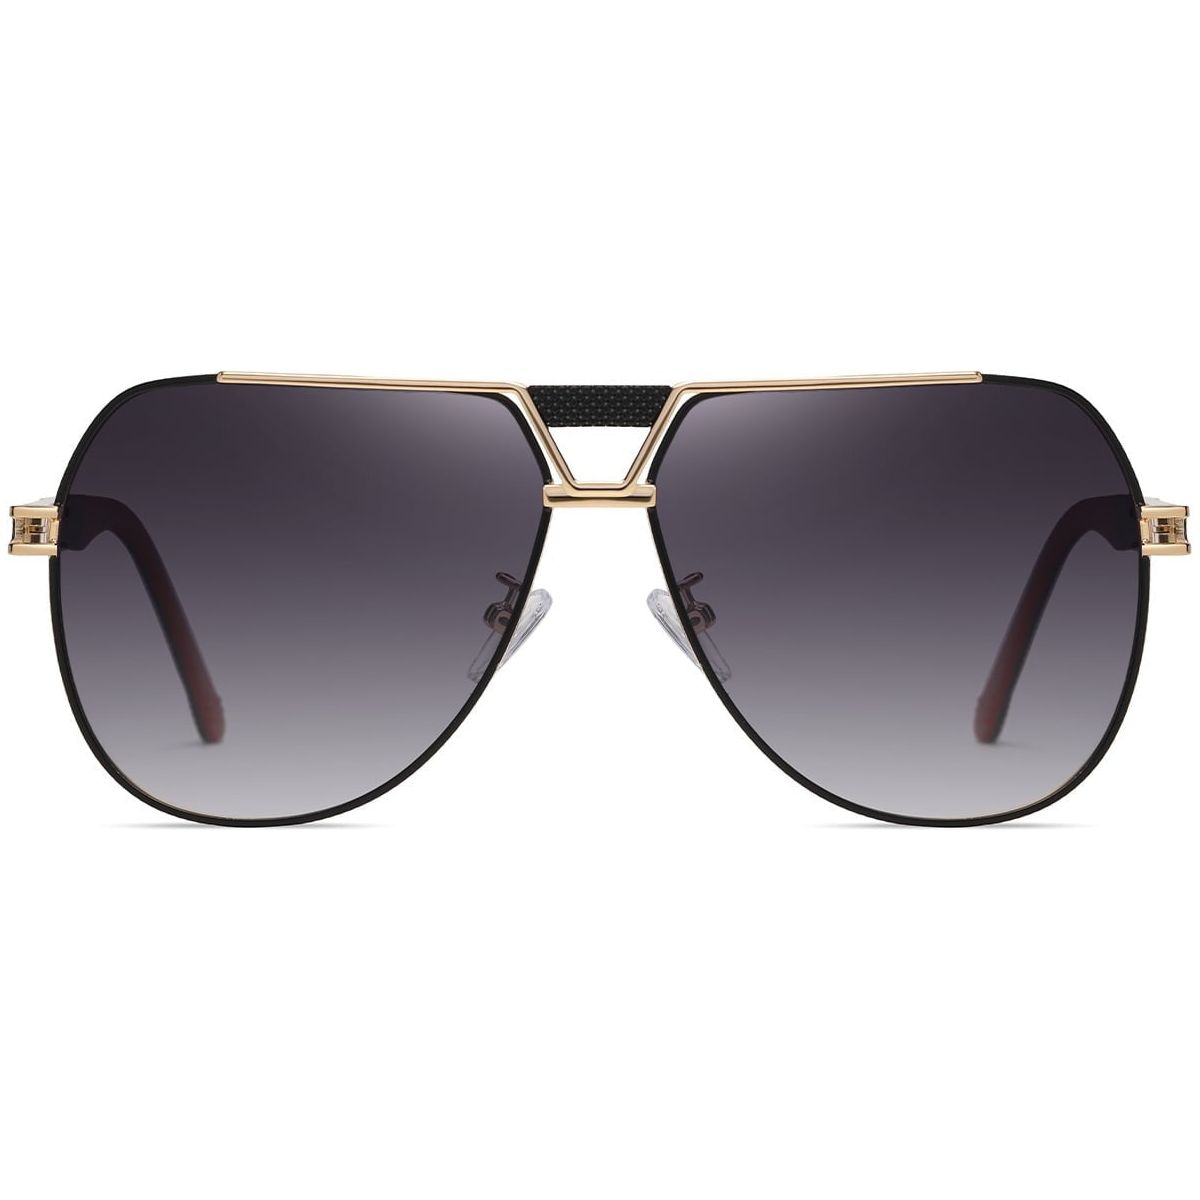 Candye Men's Aviator Geometric Sunglasses SG4354 